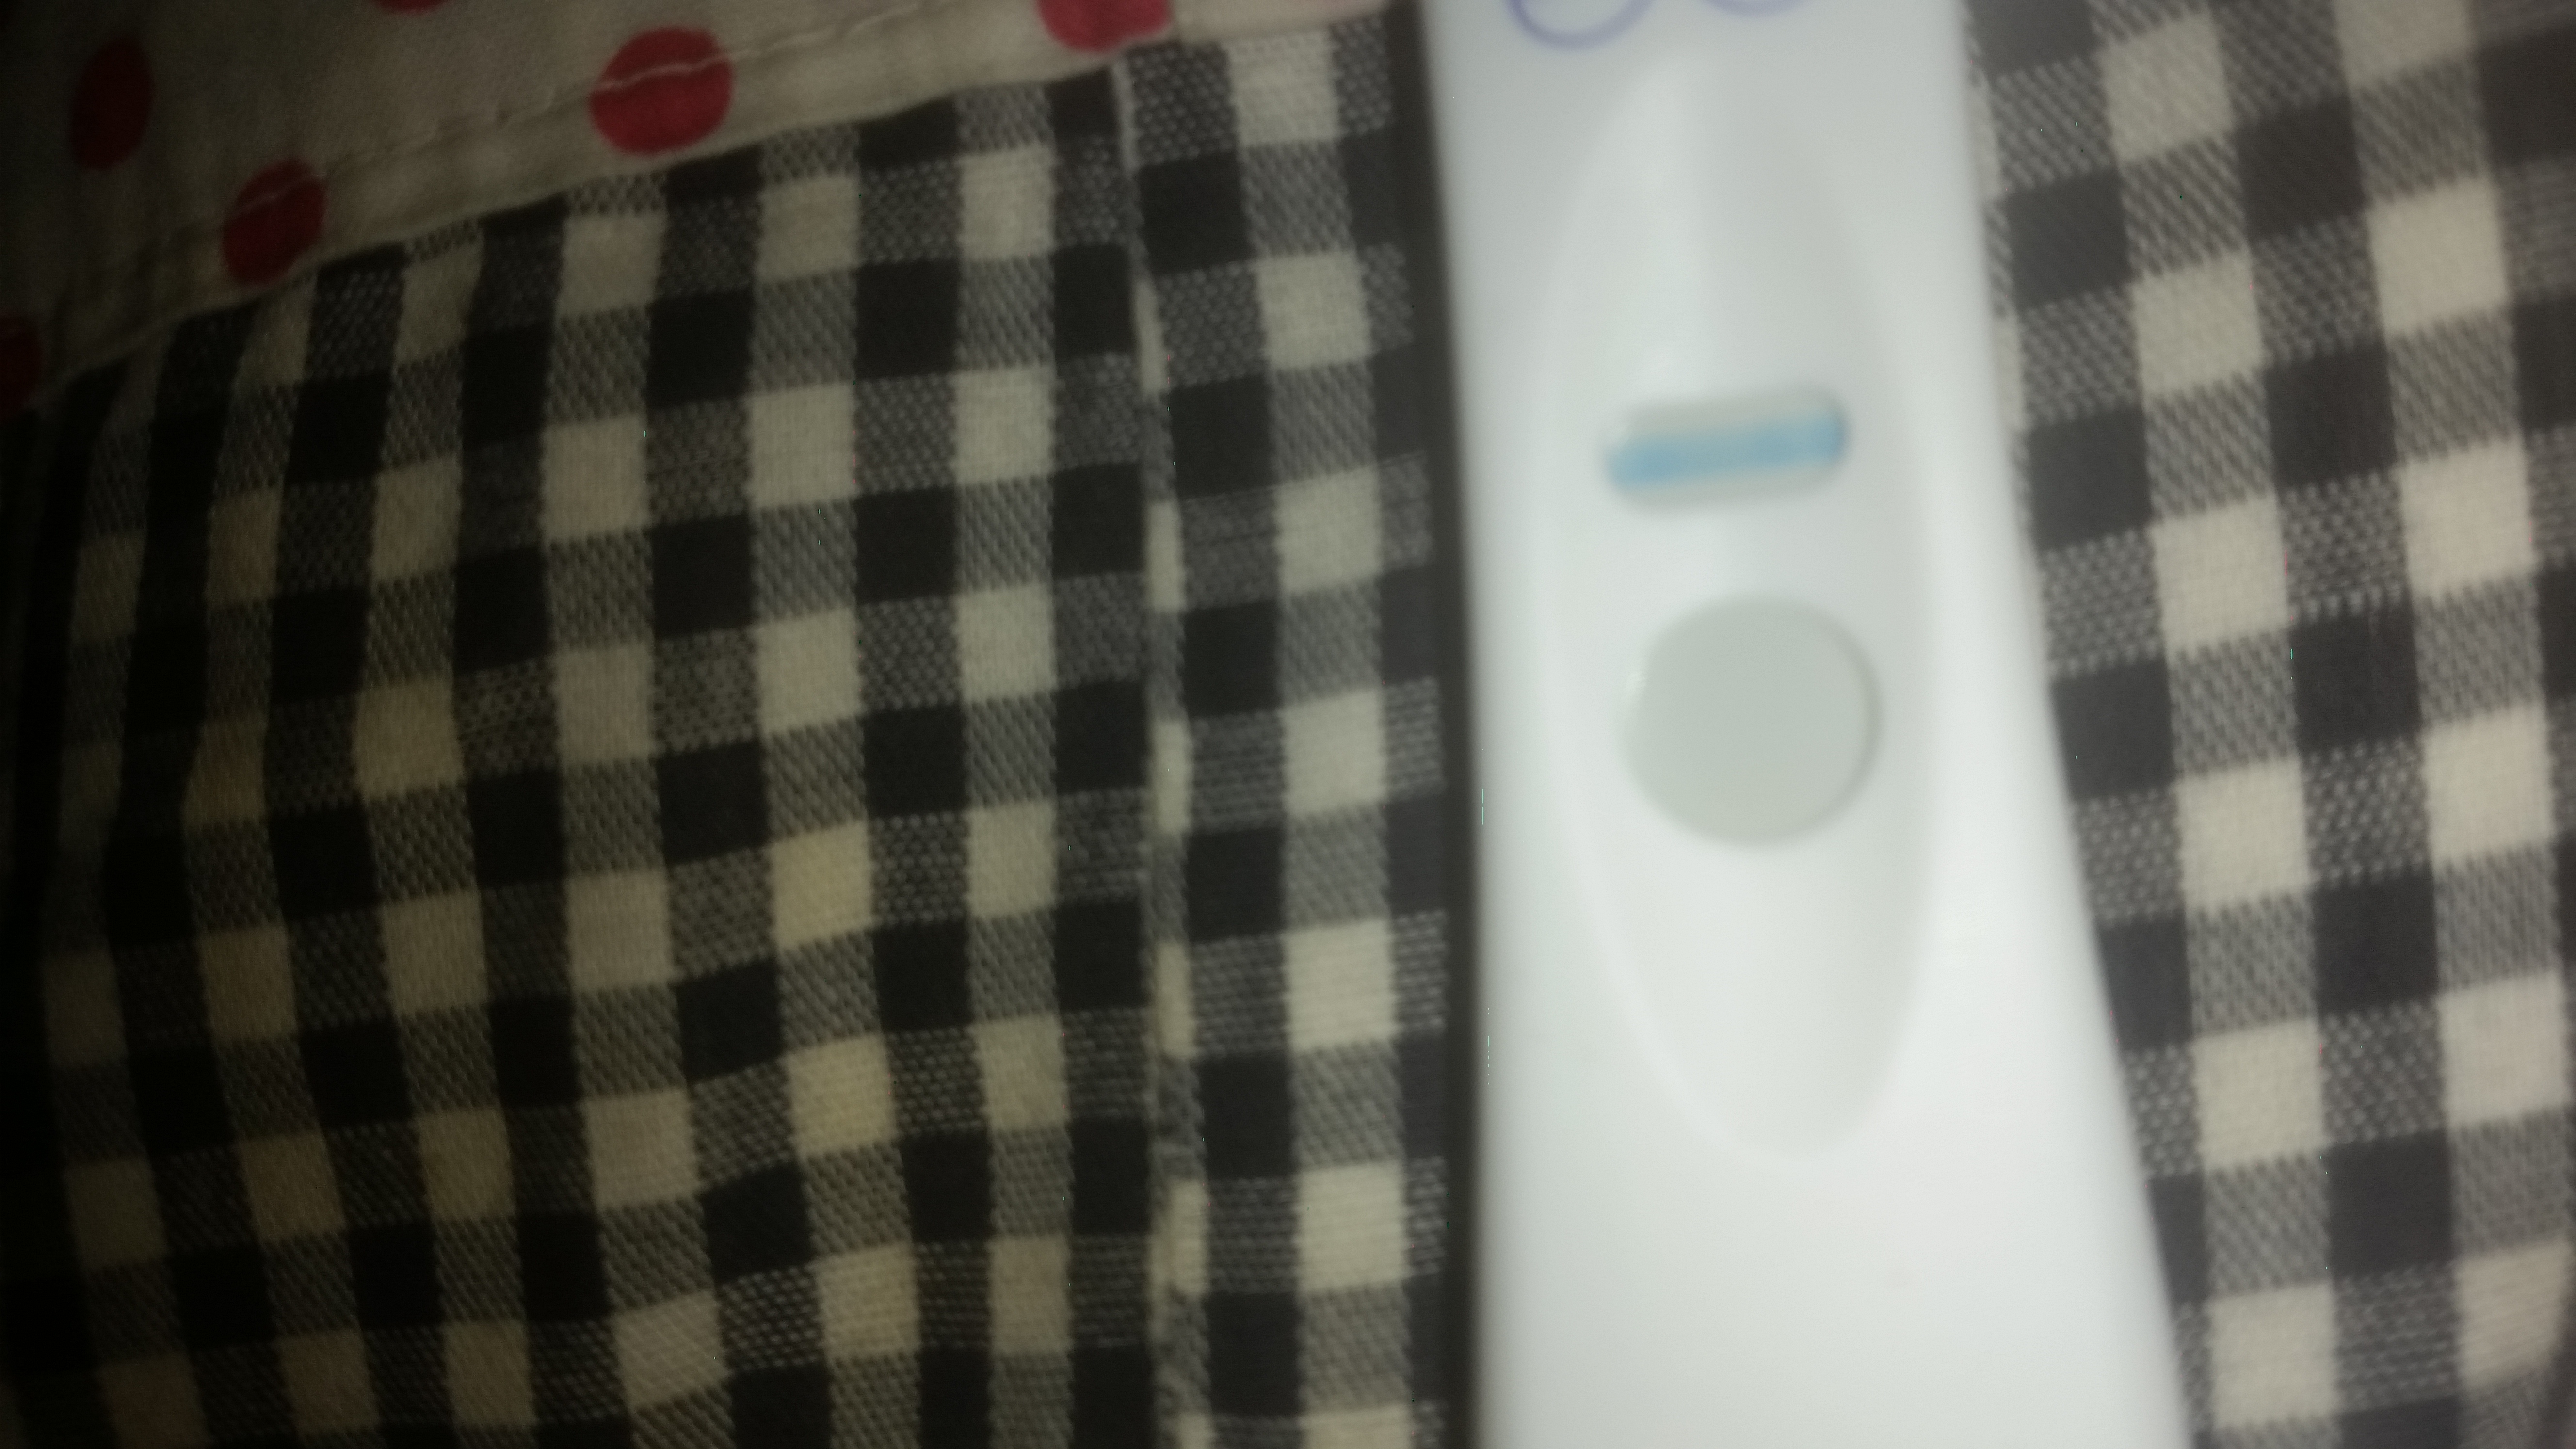 Generic Pregnancy Test